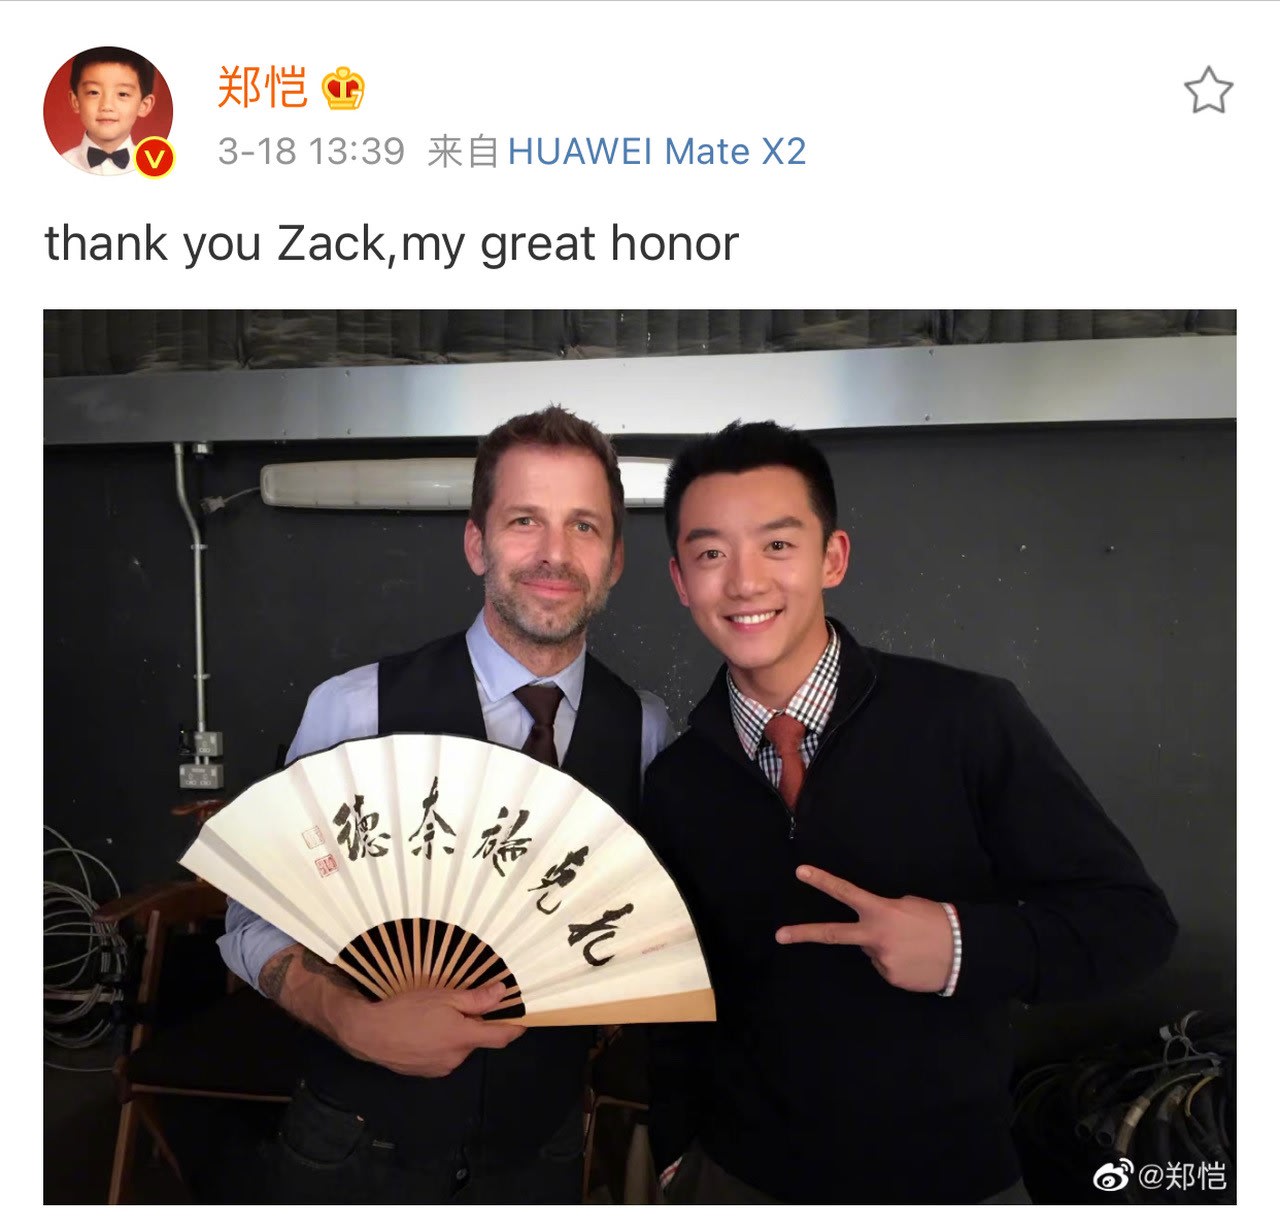 zheng kai weibo post data